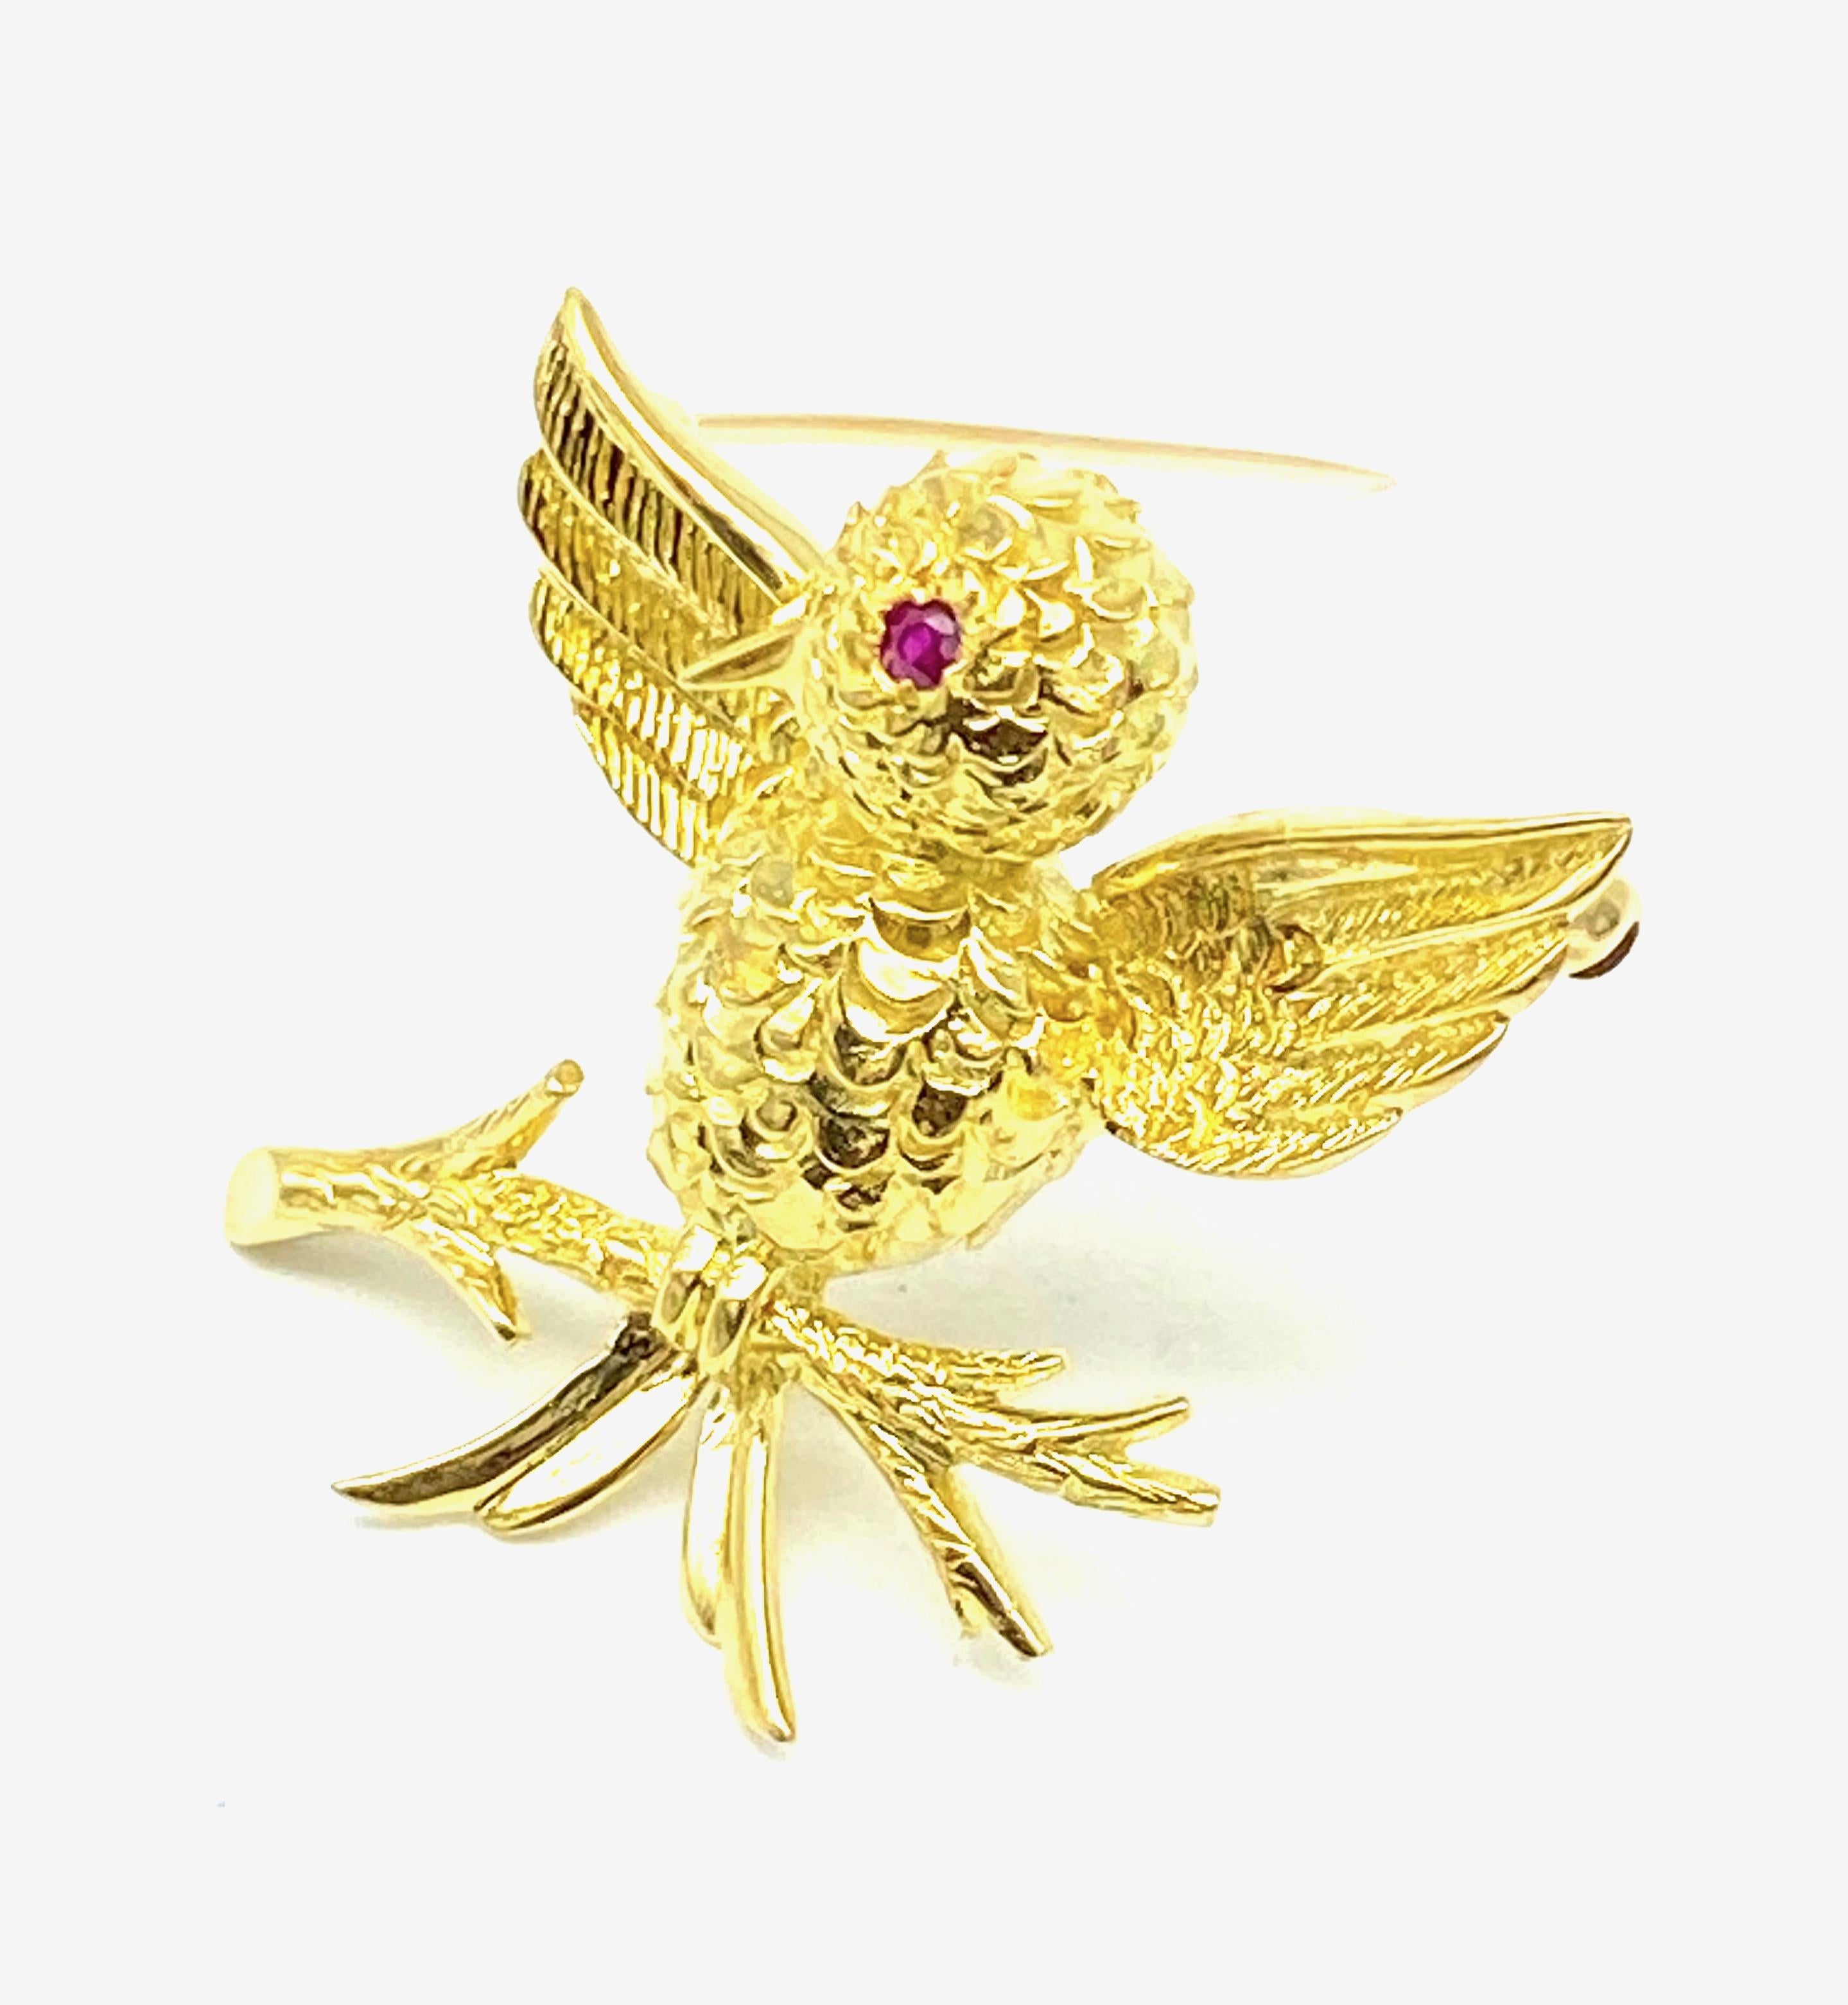 Tiffany & Co. Hummingbird 18 Karat Yellow gold & Ruby Pin.
Beautiful condition.

Measurements are 1- 1/4 